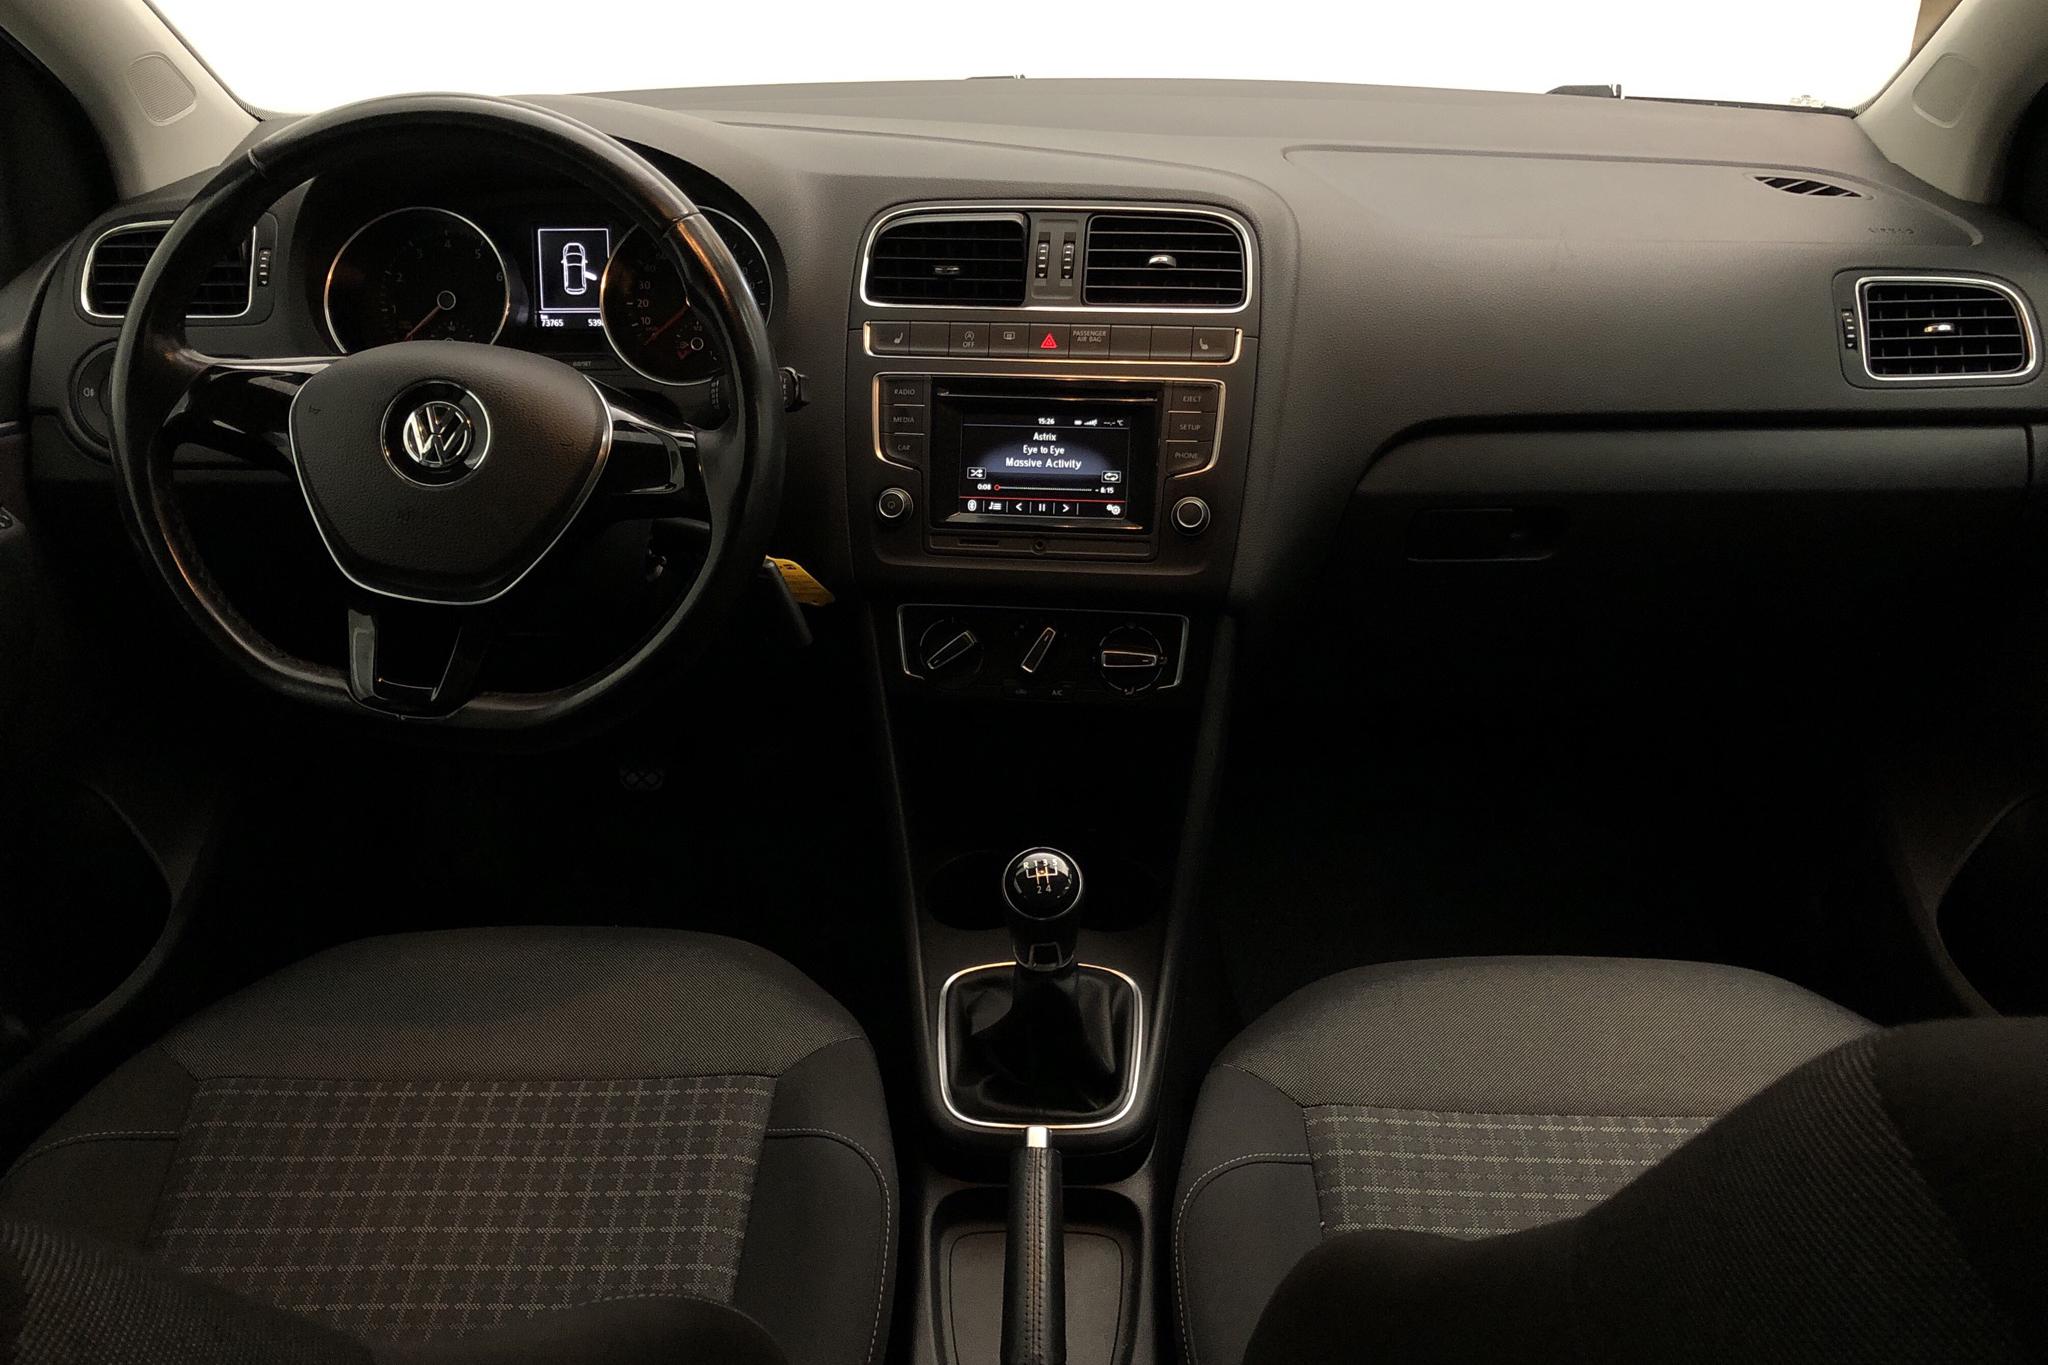 VW Polo 1.2 TSI 5dr (90hk) - 7 377 mil - Manuell - svart - 2016